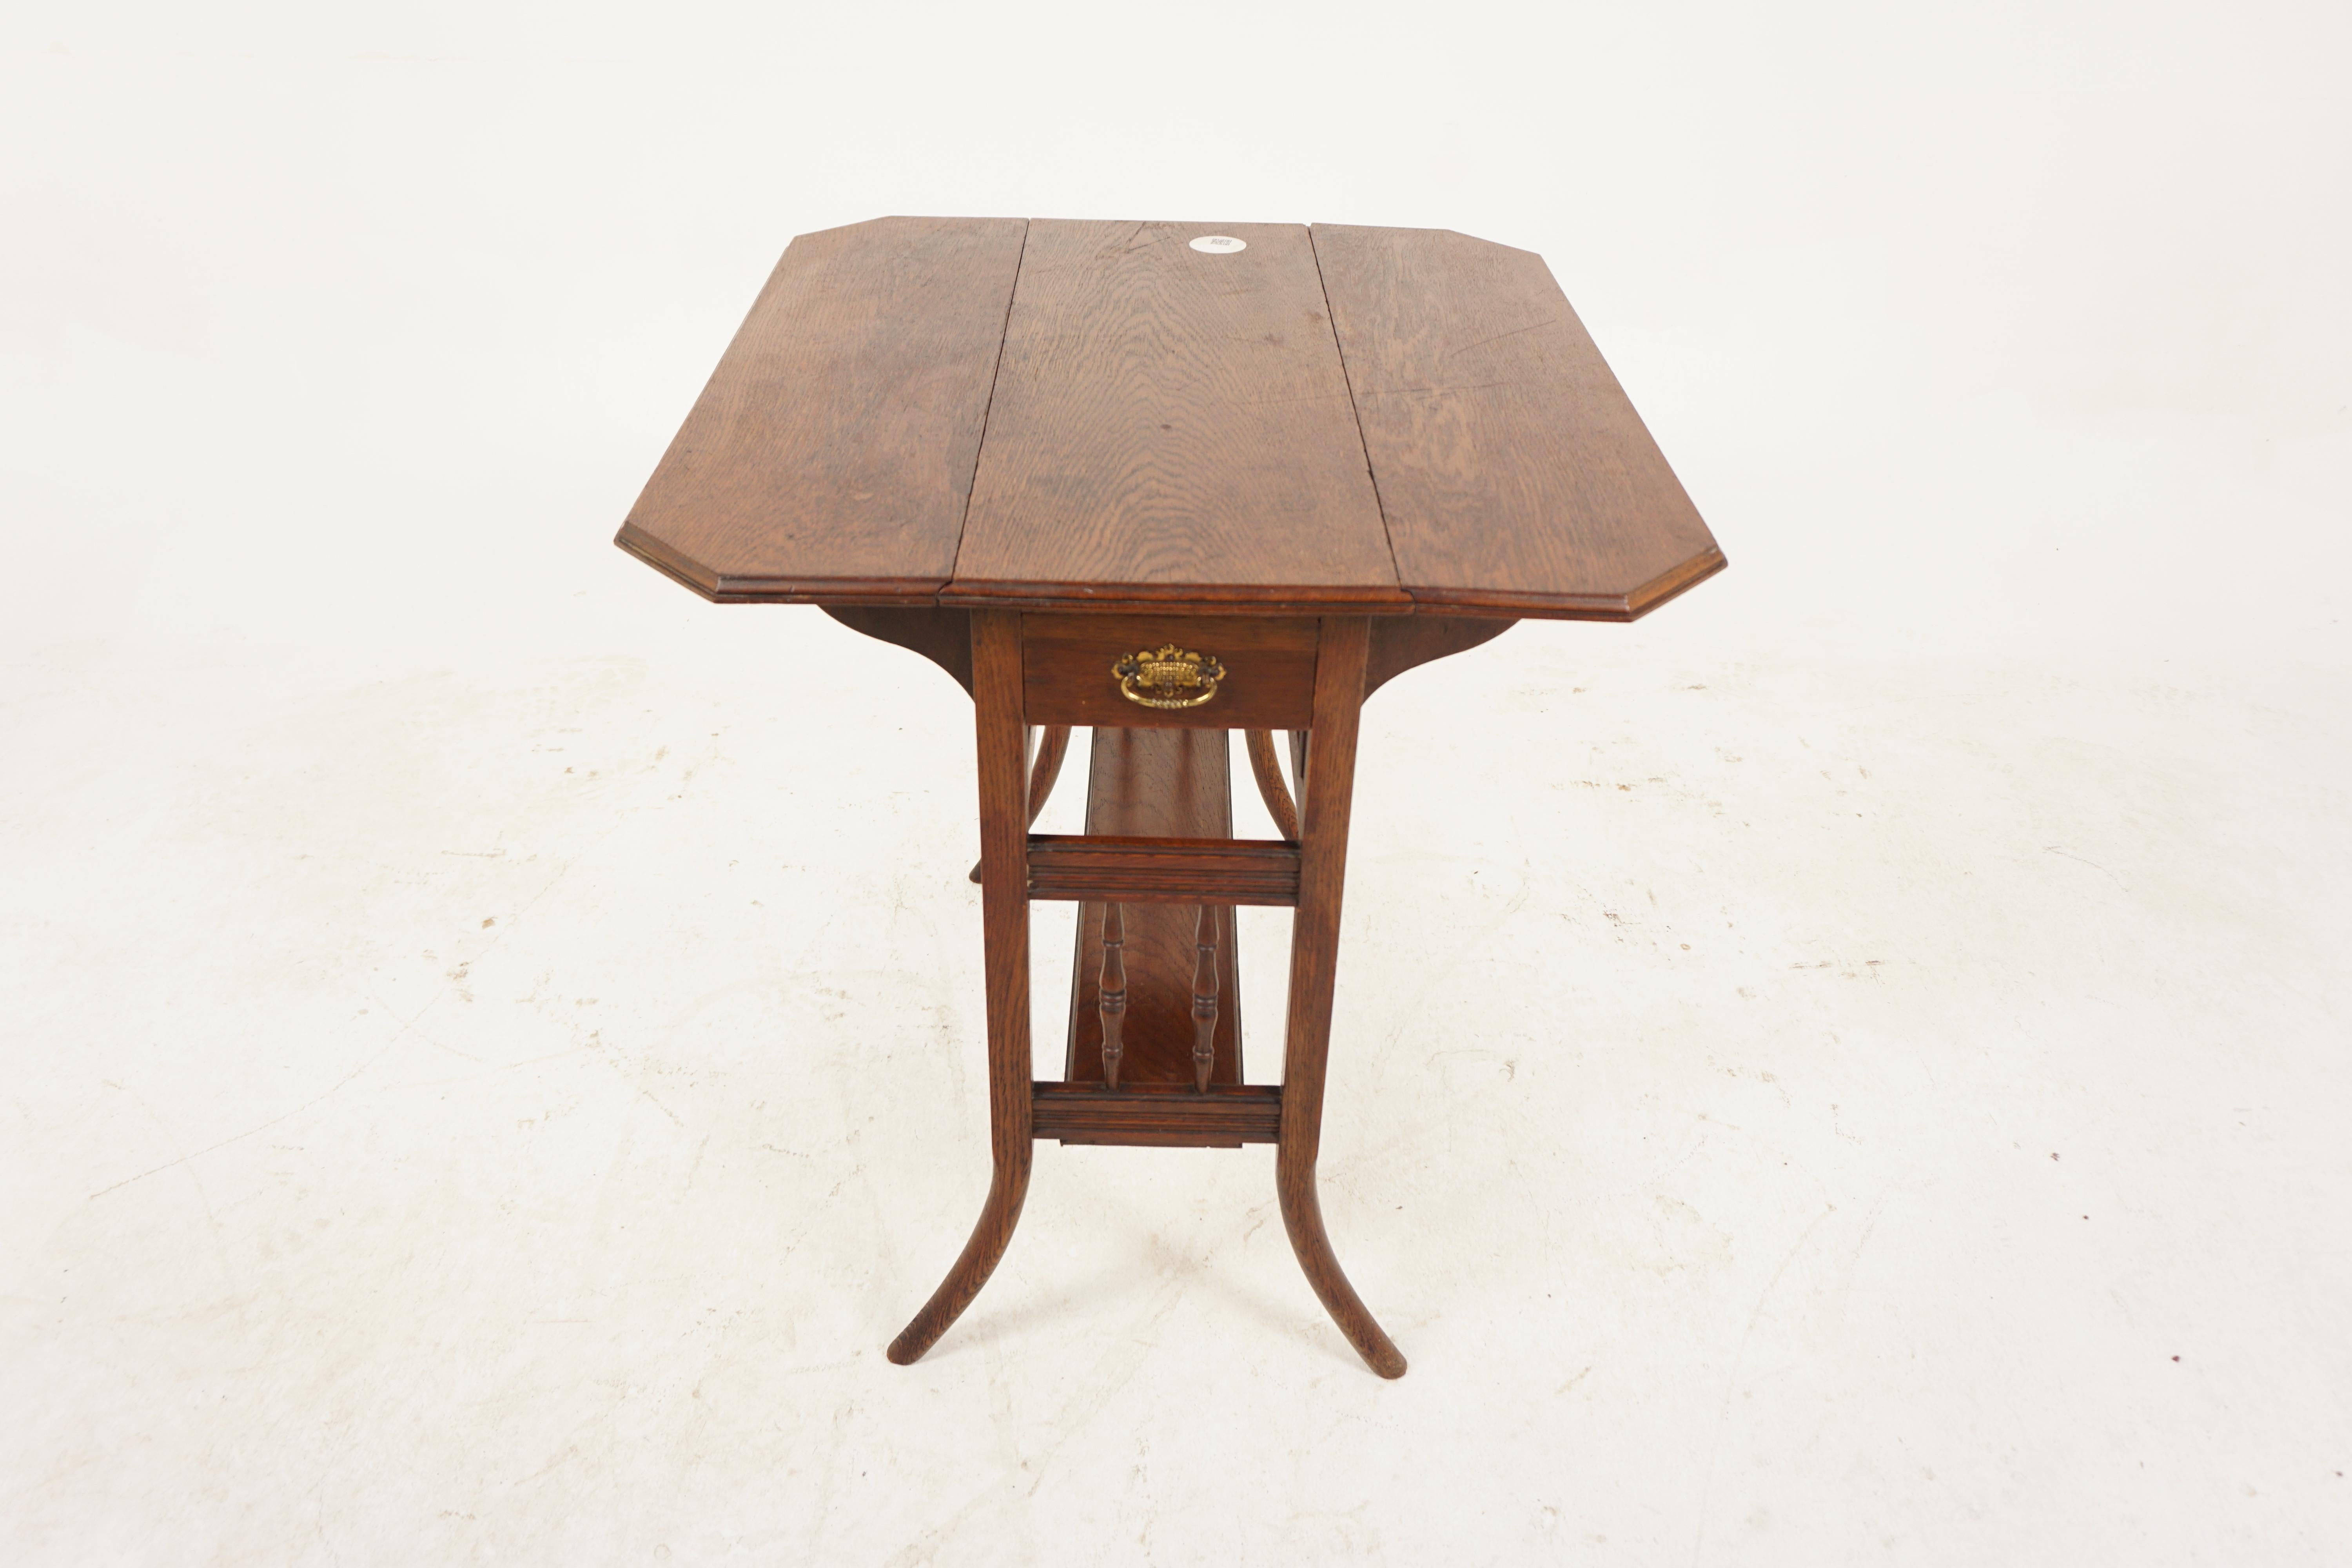 Scottish Antique Oak Table, Gateleg Drop Leaf Table with Drawers, Scotland 1890, H1093 For Sale